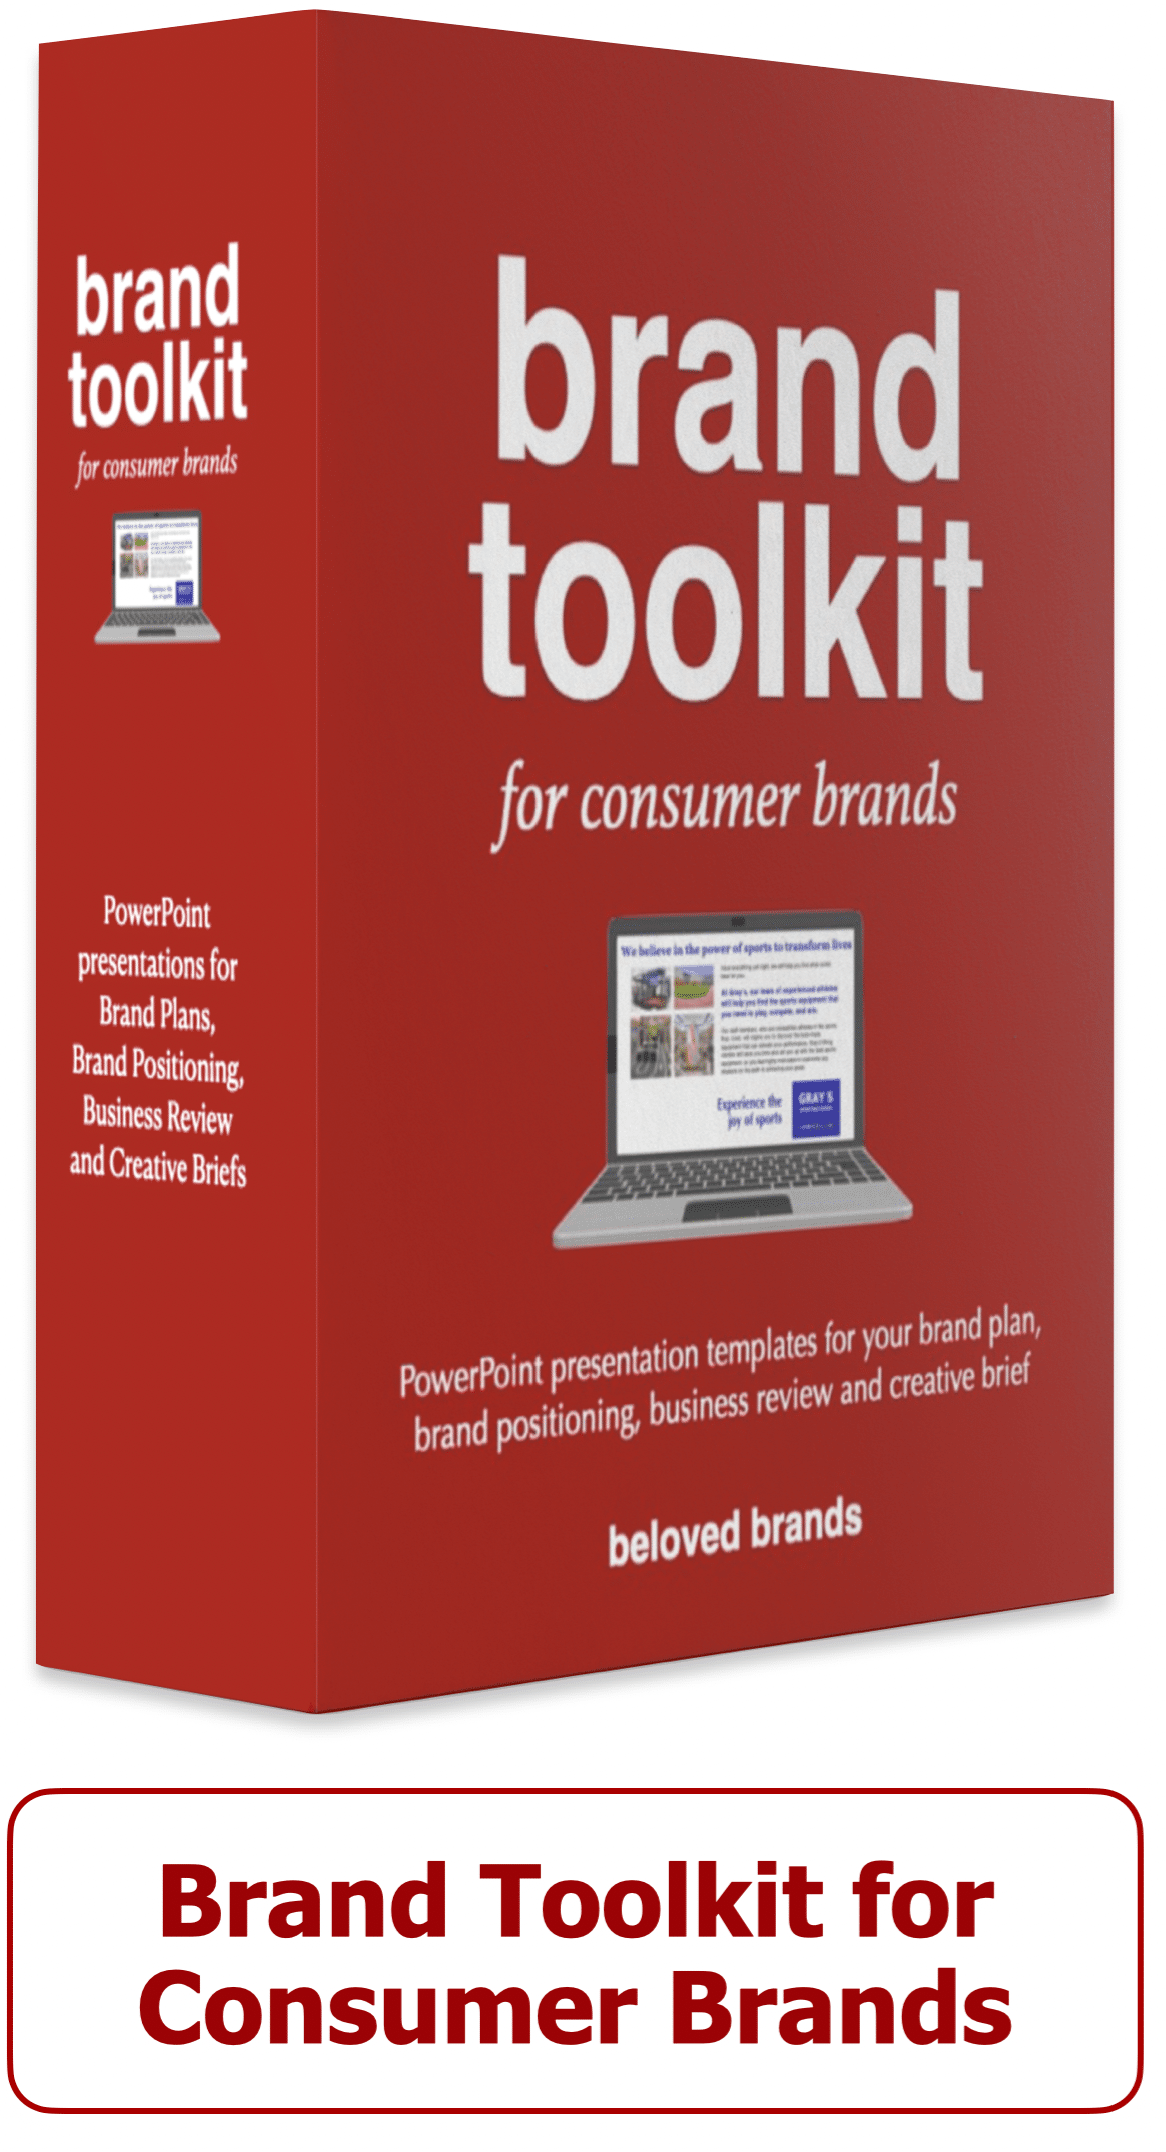 Brand Toolkit for Consumer Brands